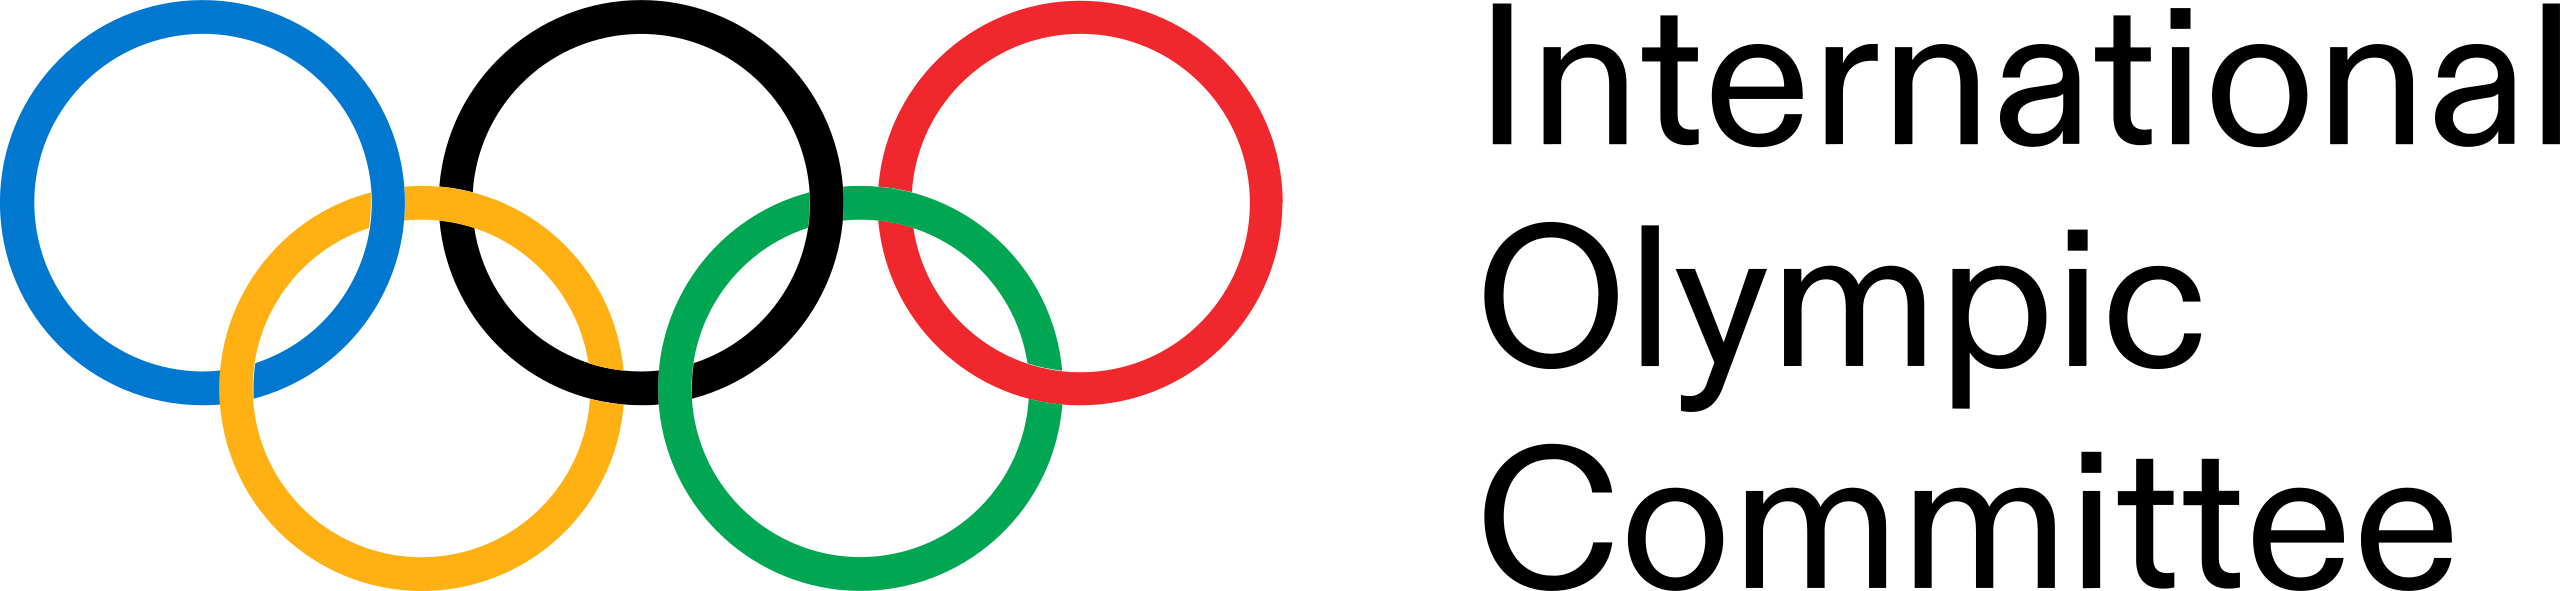 Budapest unveils logo for Olympic 2024 bid - Design Week